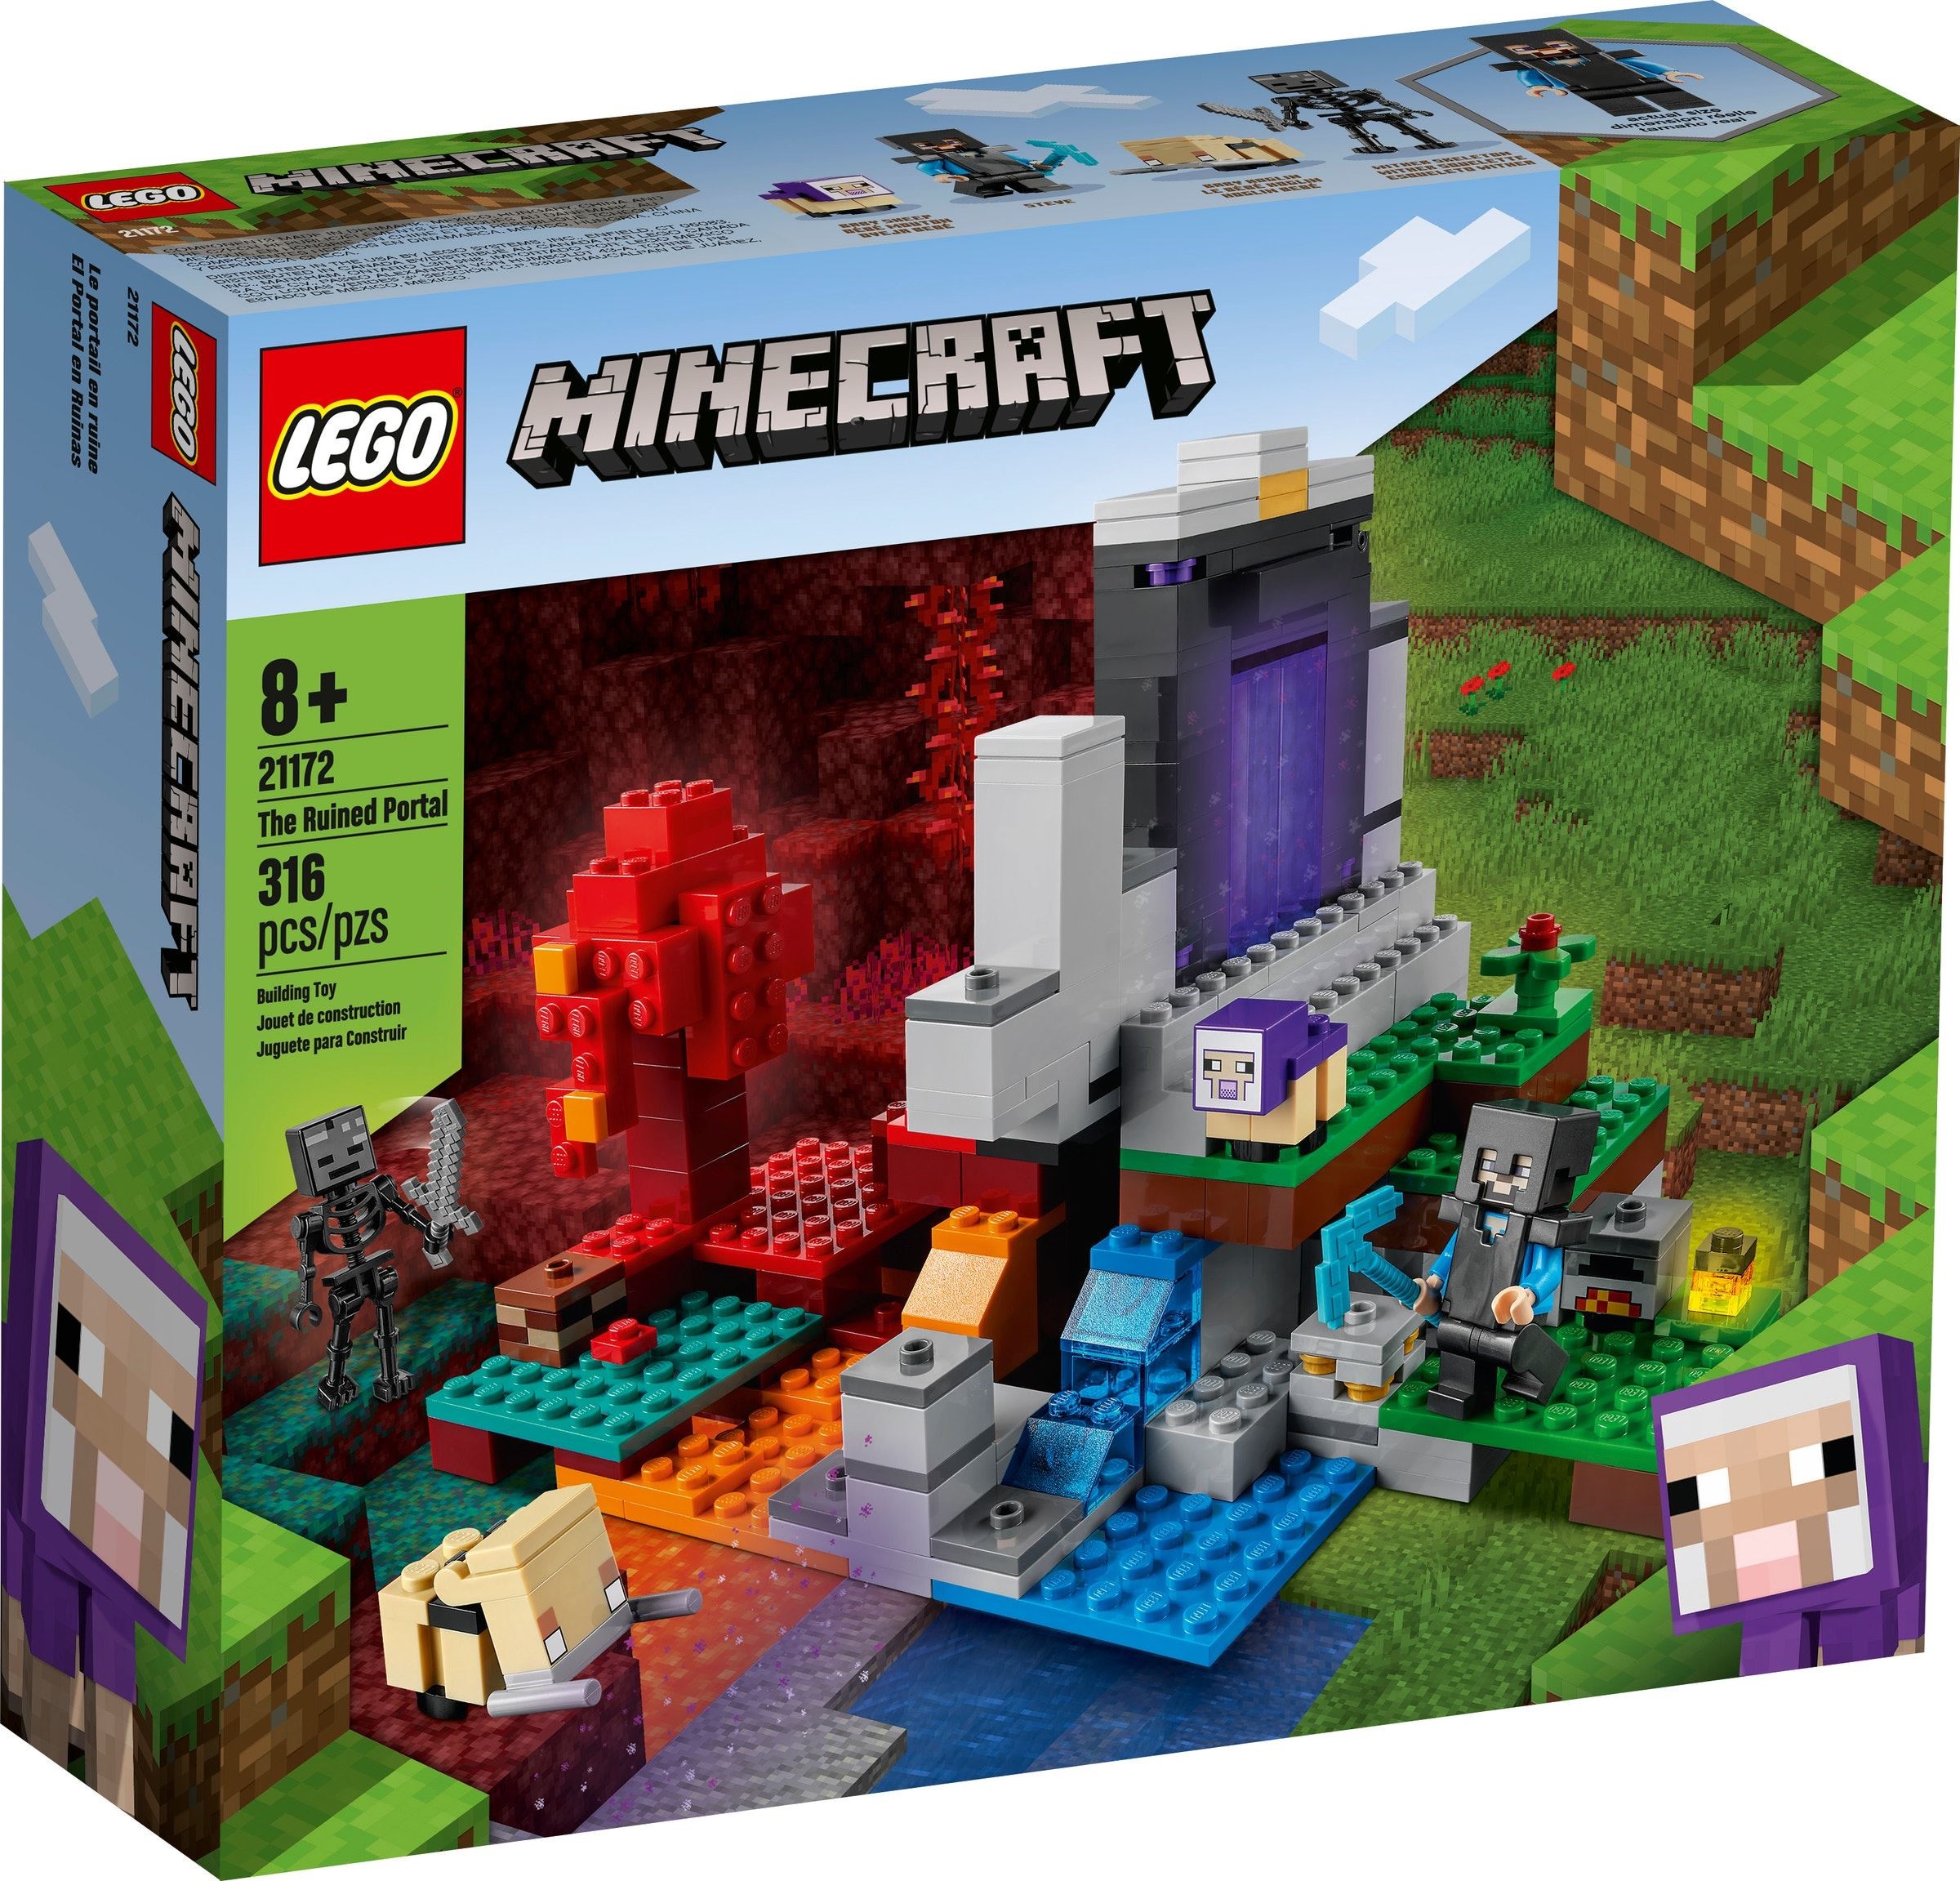 Minecraft Lego World Zombie, Blaze Bridge Nether Set